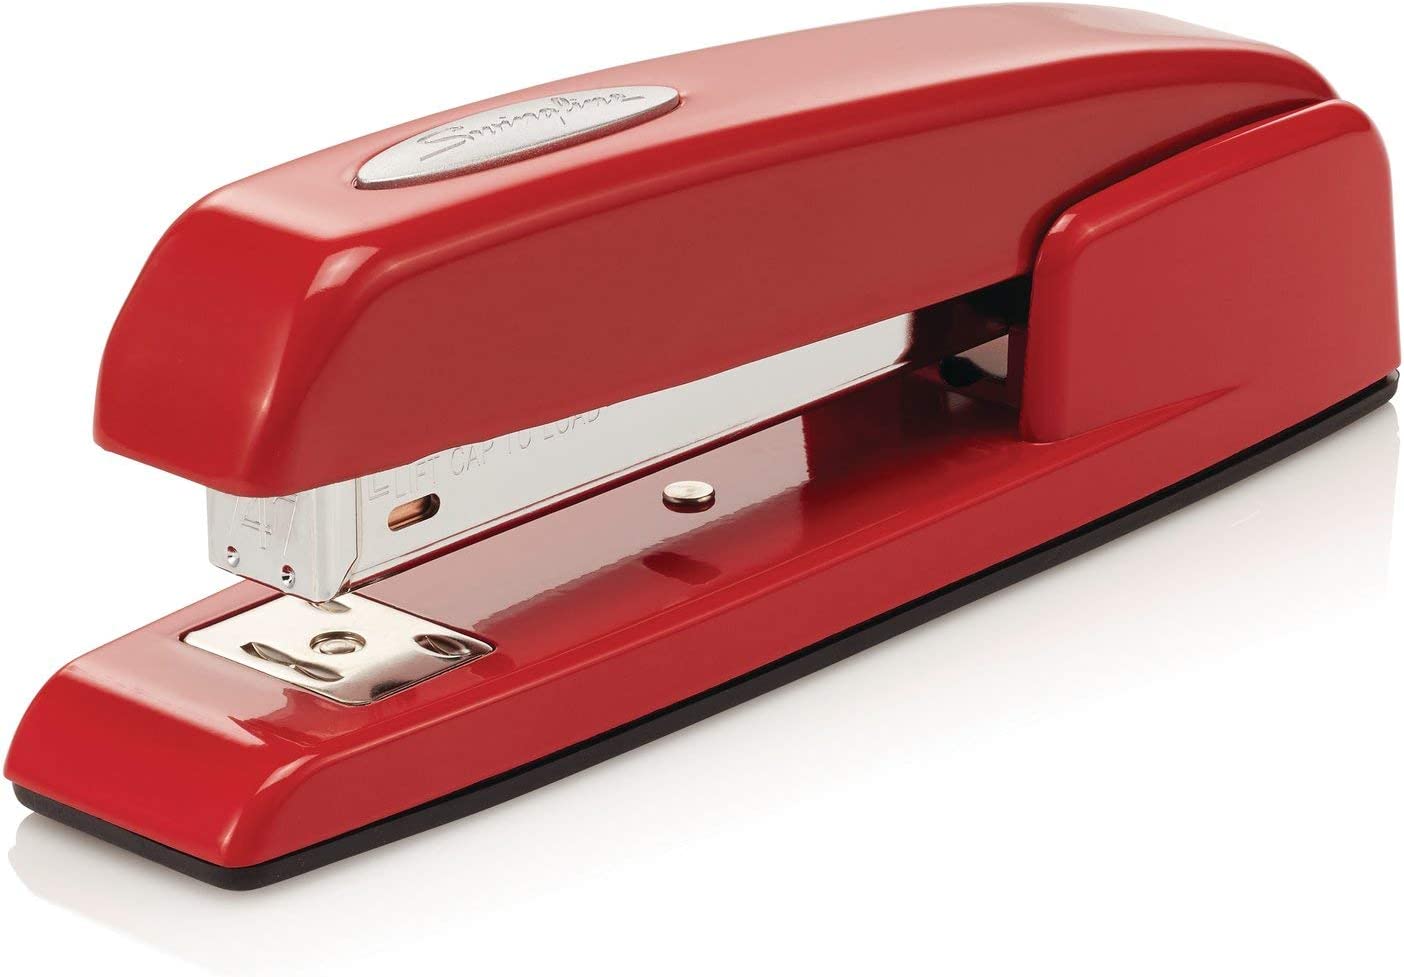 Small, inexpensive thing: stapler